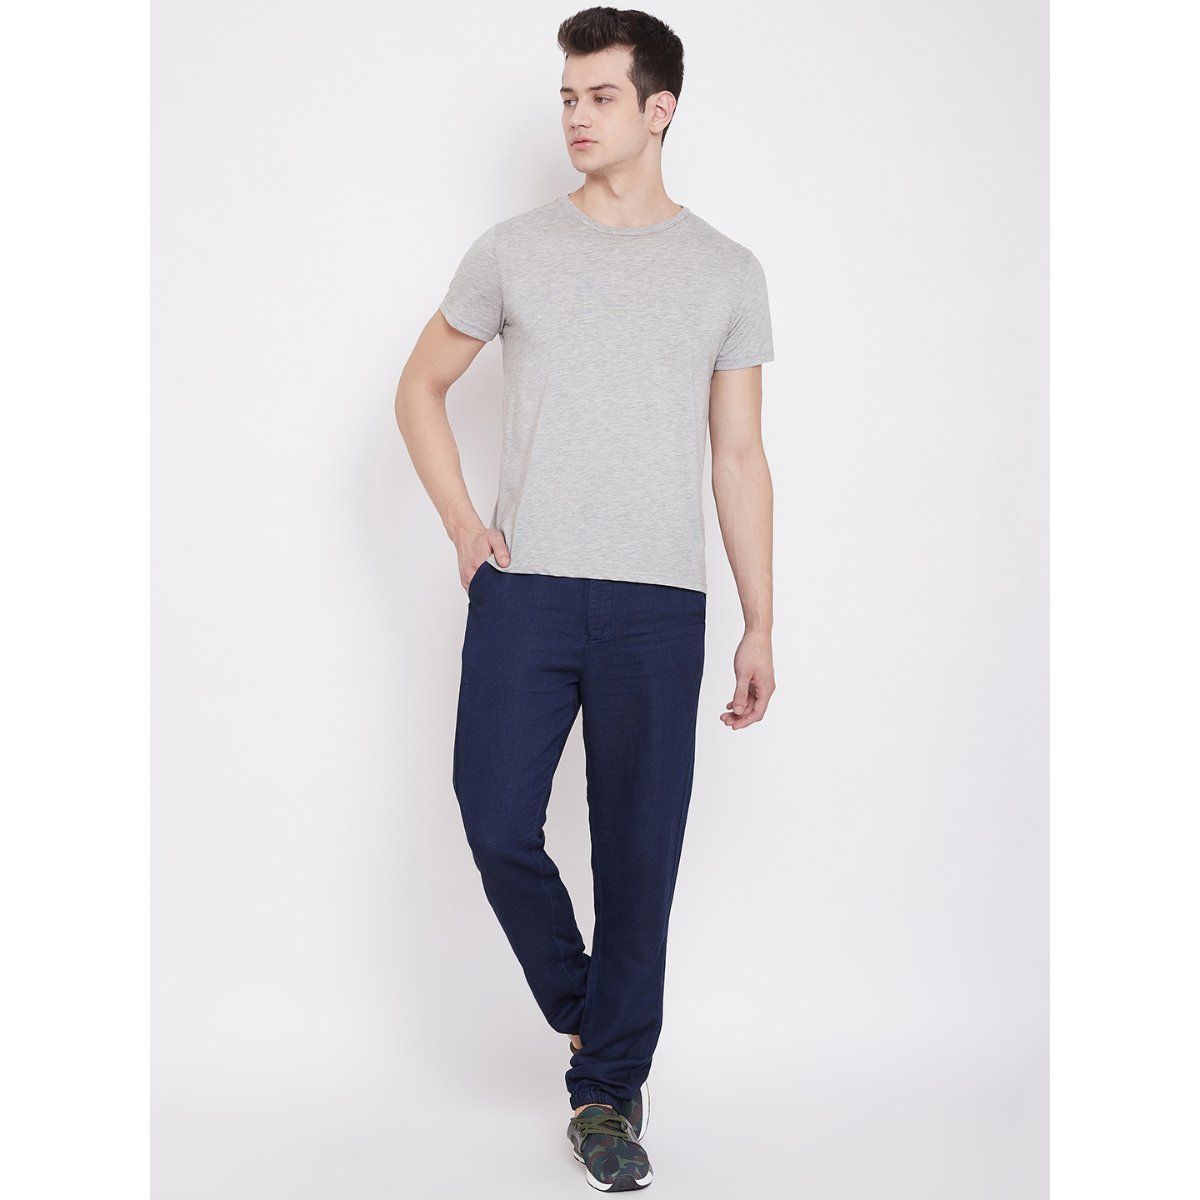 Buy SAPPER denim cotton pyjamas for men (Color - Black, Size - L) at  Amazon.in